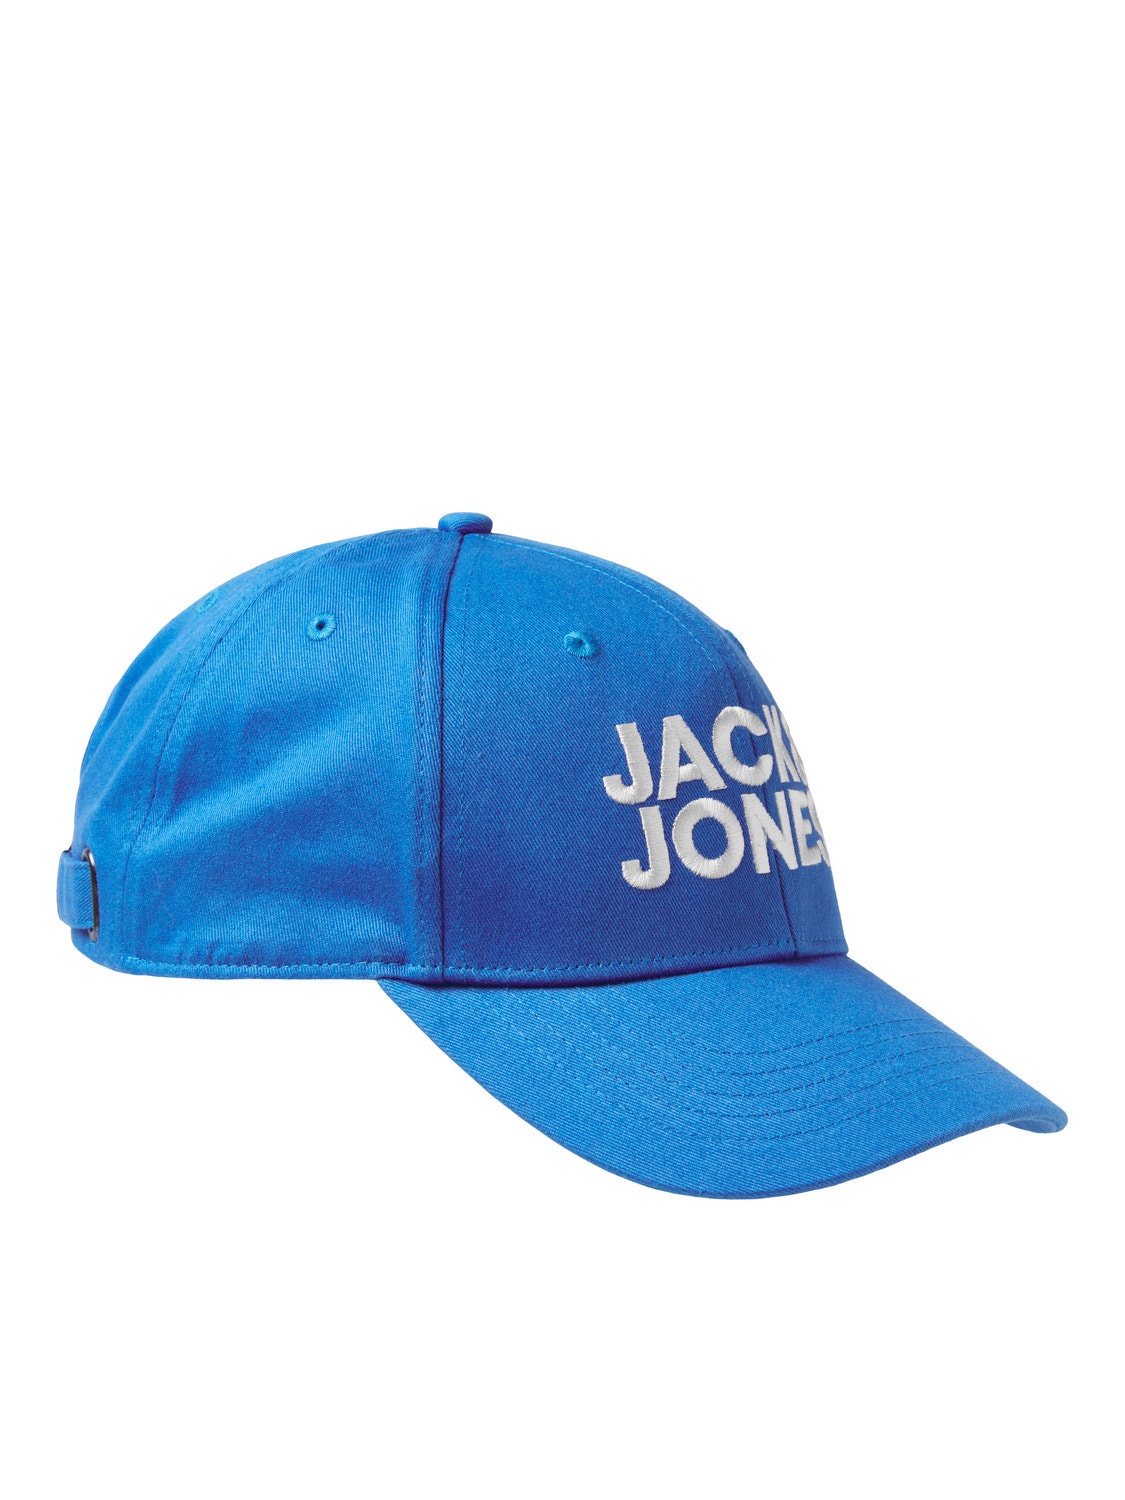 Jack & Jones Baseballkeps -Electric Blue Lemonade - 12254296